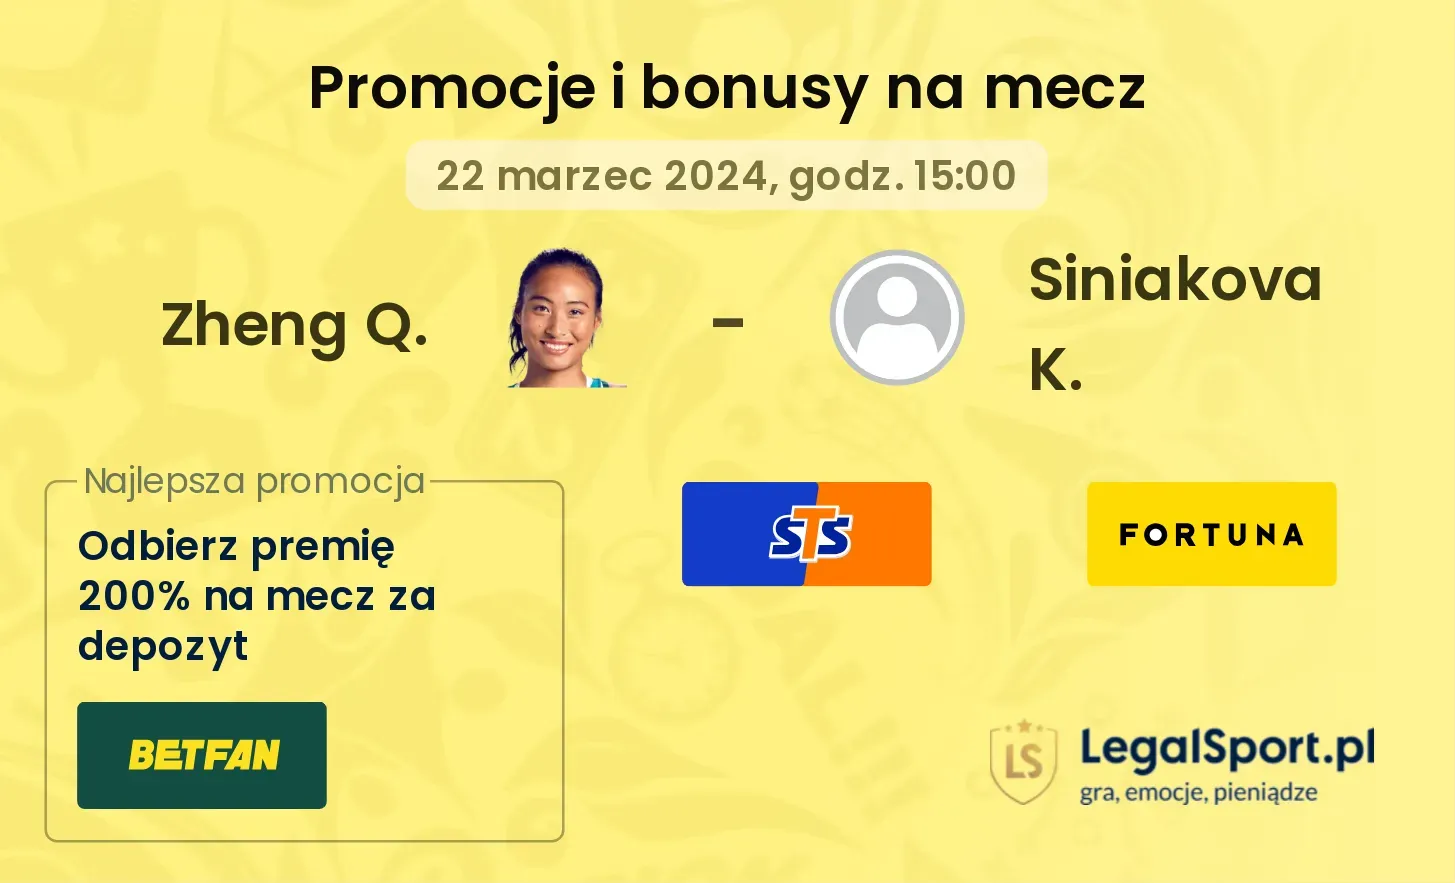 Zheng Q. - Siniakova K. promocje bonusy na mecz